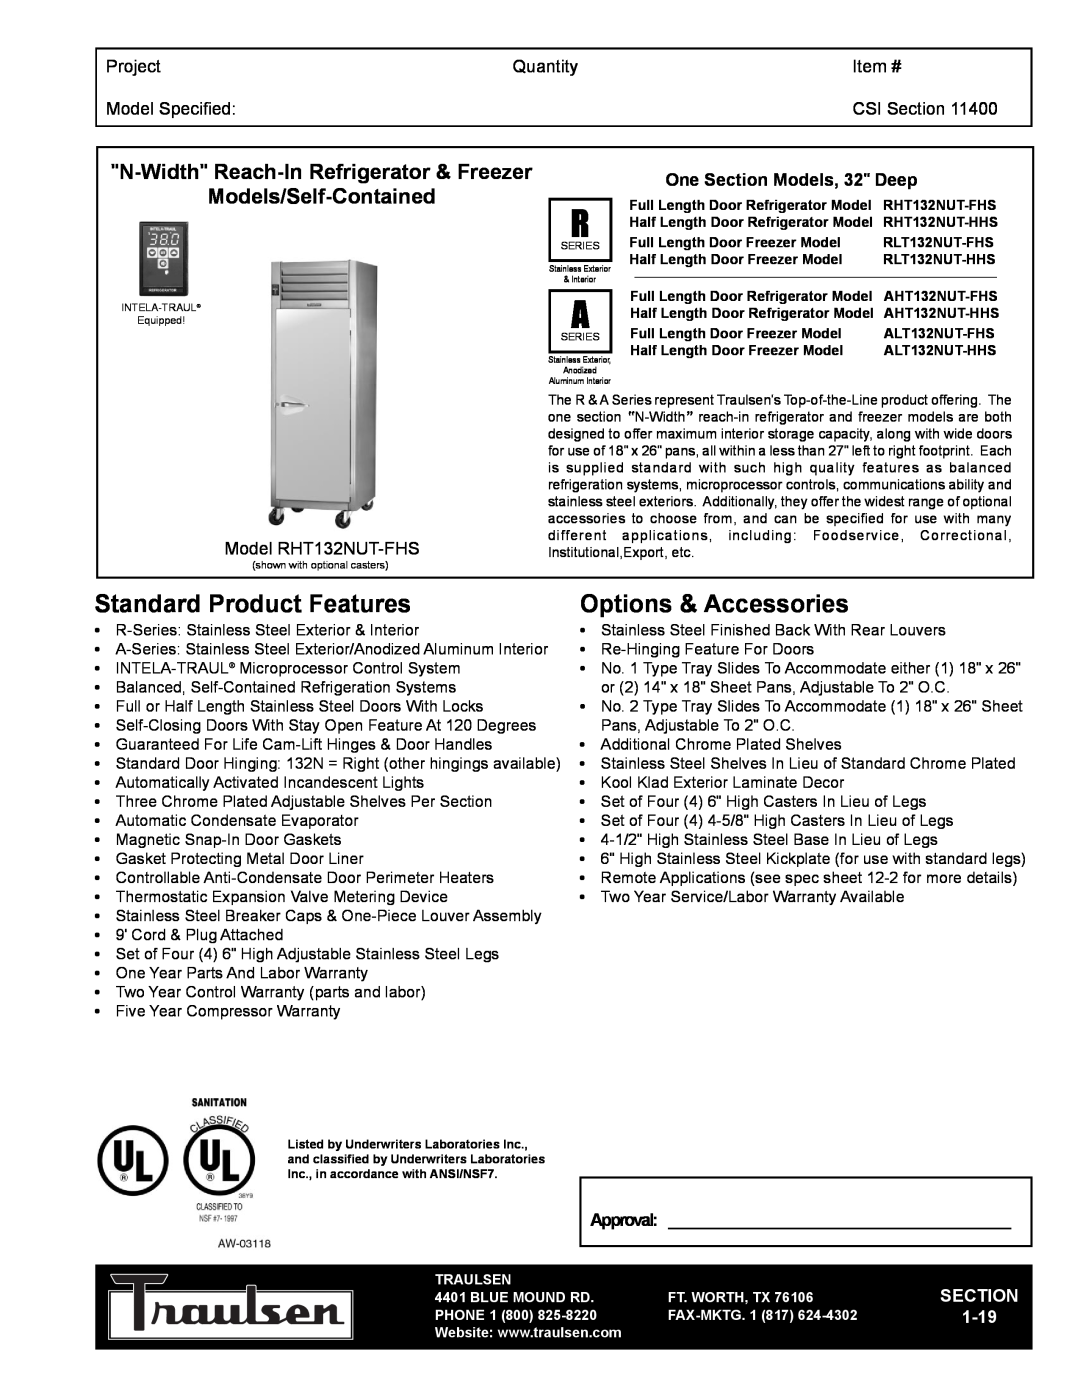 Traulsen RHT132NUT-FHS warranty N-Width Reach-InRefrigerator & Freezer, Models/Self-Contained, Project, Quantity, Item # 